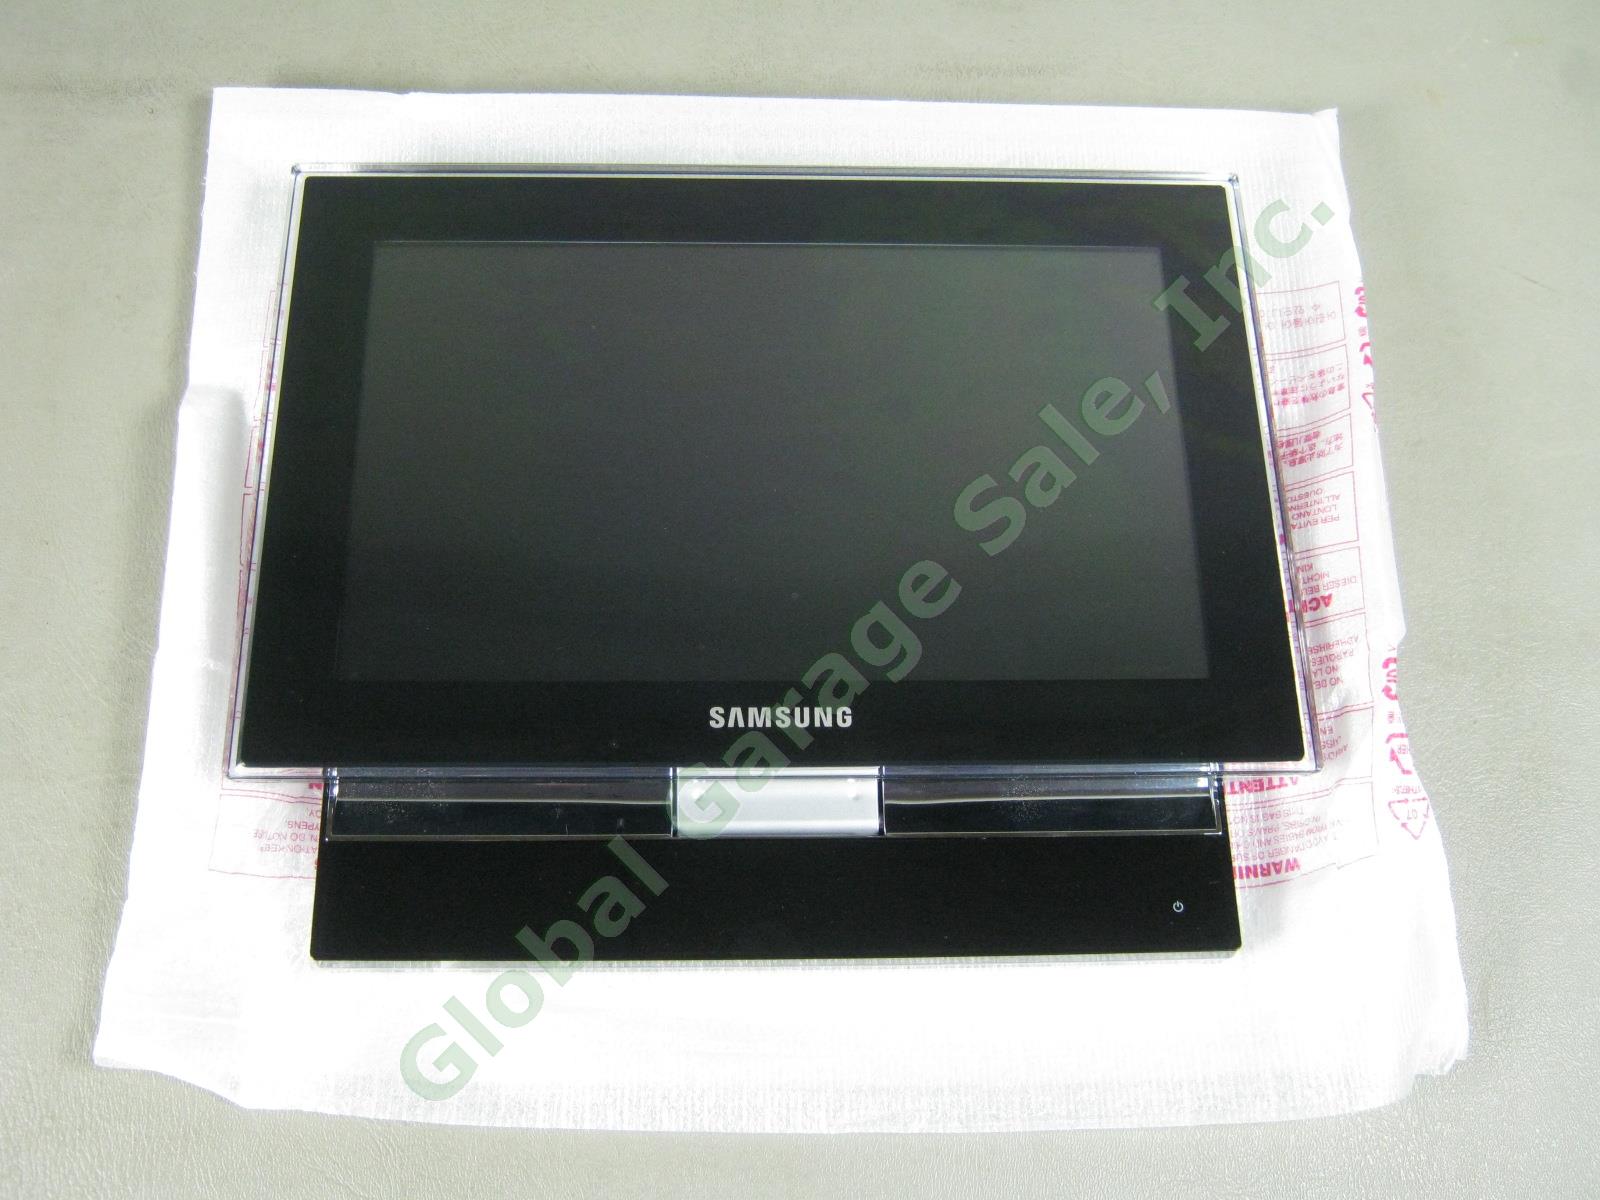 NEW IN BOX Samsung 10" Digital Photo Frame Music Video Player Bluetooth 1000P 2